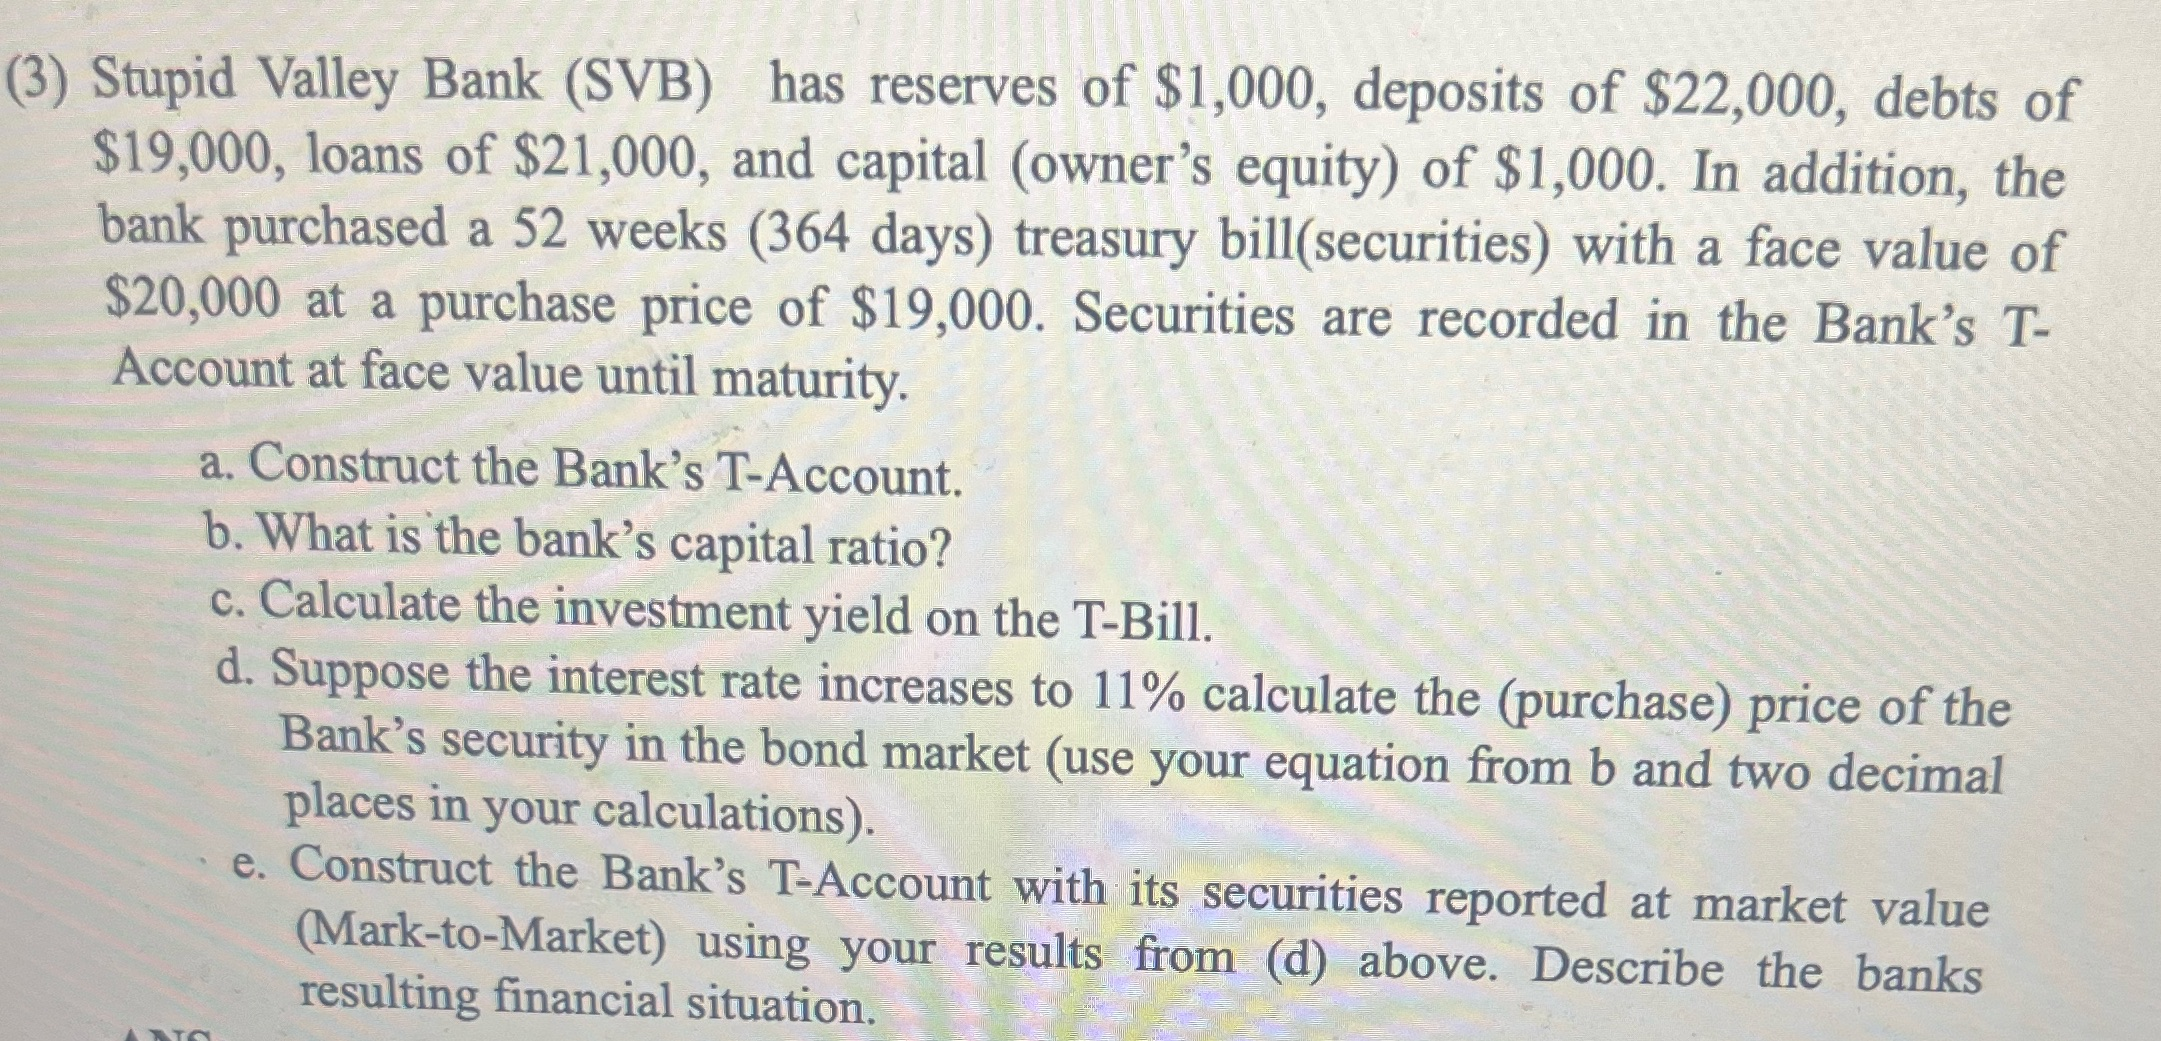 (3) Stupid Valley Bank (SVB) has reserves of $1,000, deposits of $22,000, debts of $19,000, loans of $21,000,